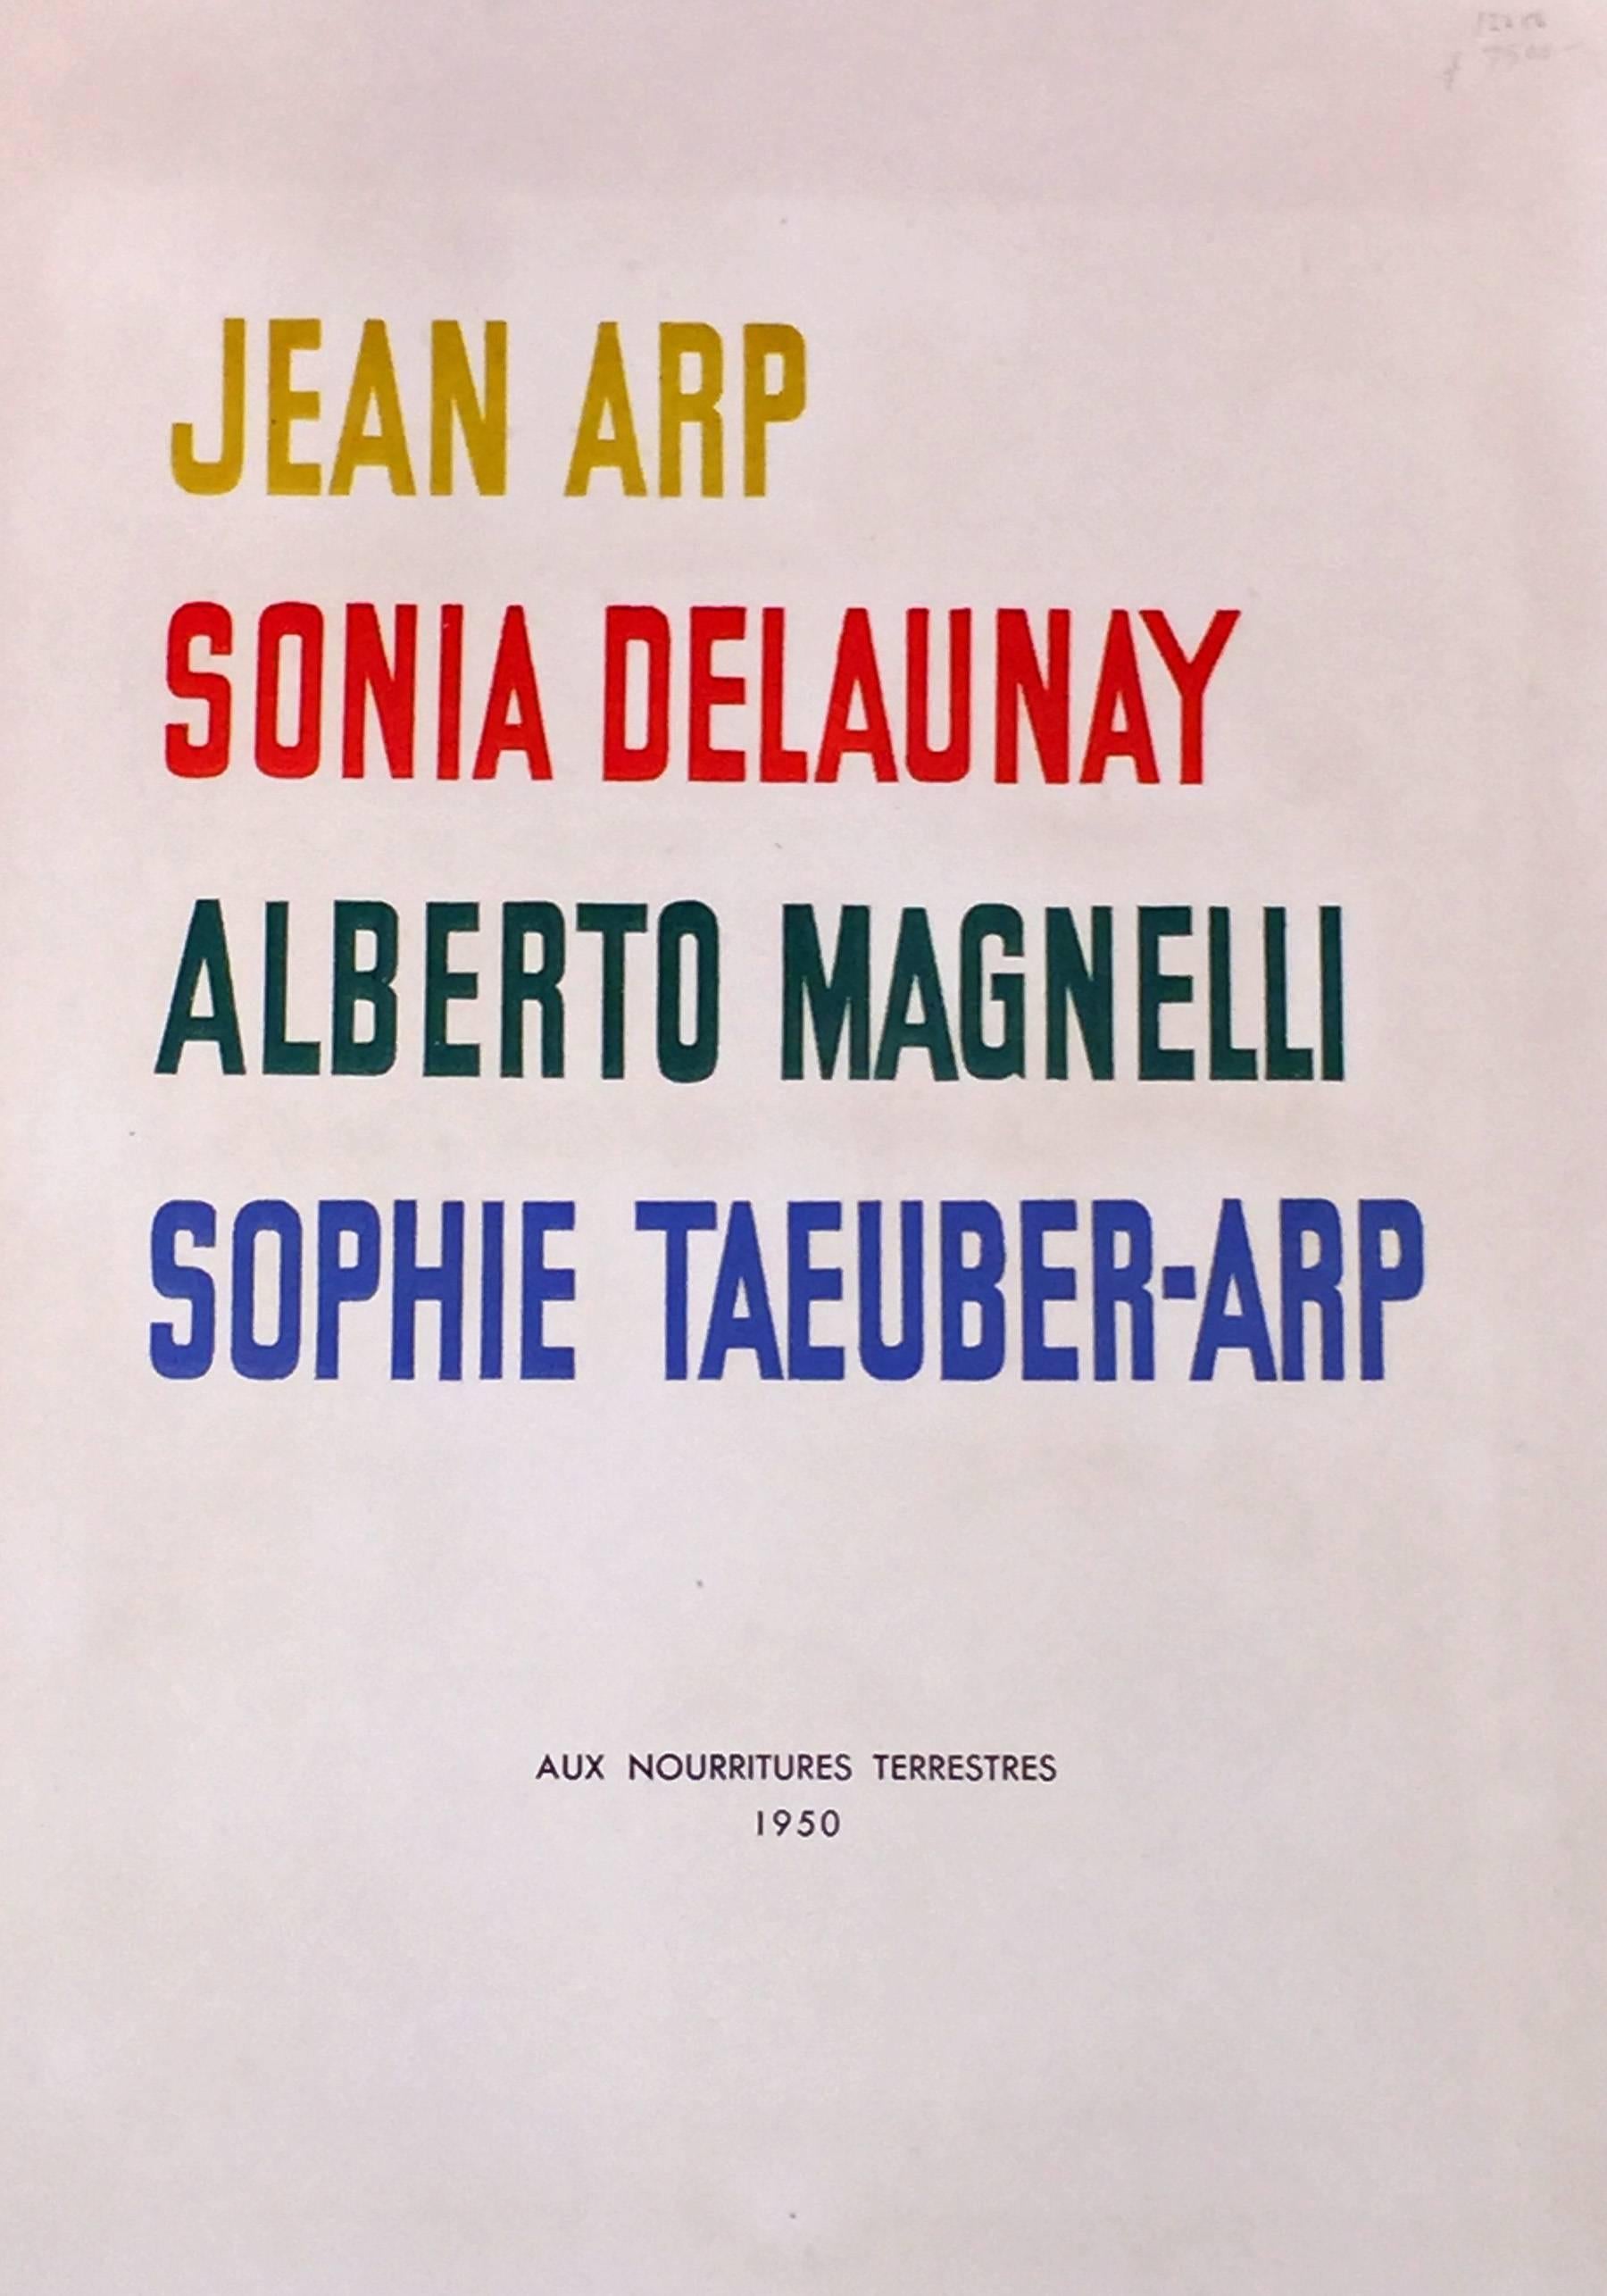 Hans (Jean) Arp Abstract Print - JEAN ARP - SONIA DELAUNAY - ALBERTO MAGNELLI - SOPHIE TAEUBER-ARP.